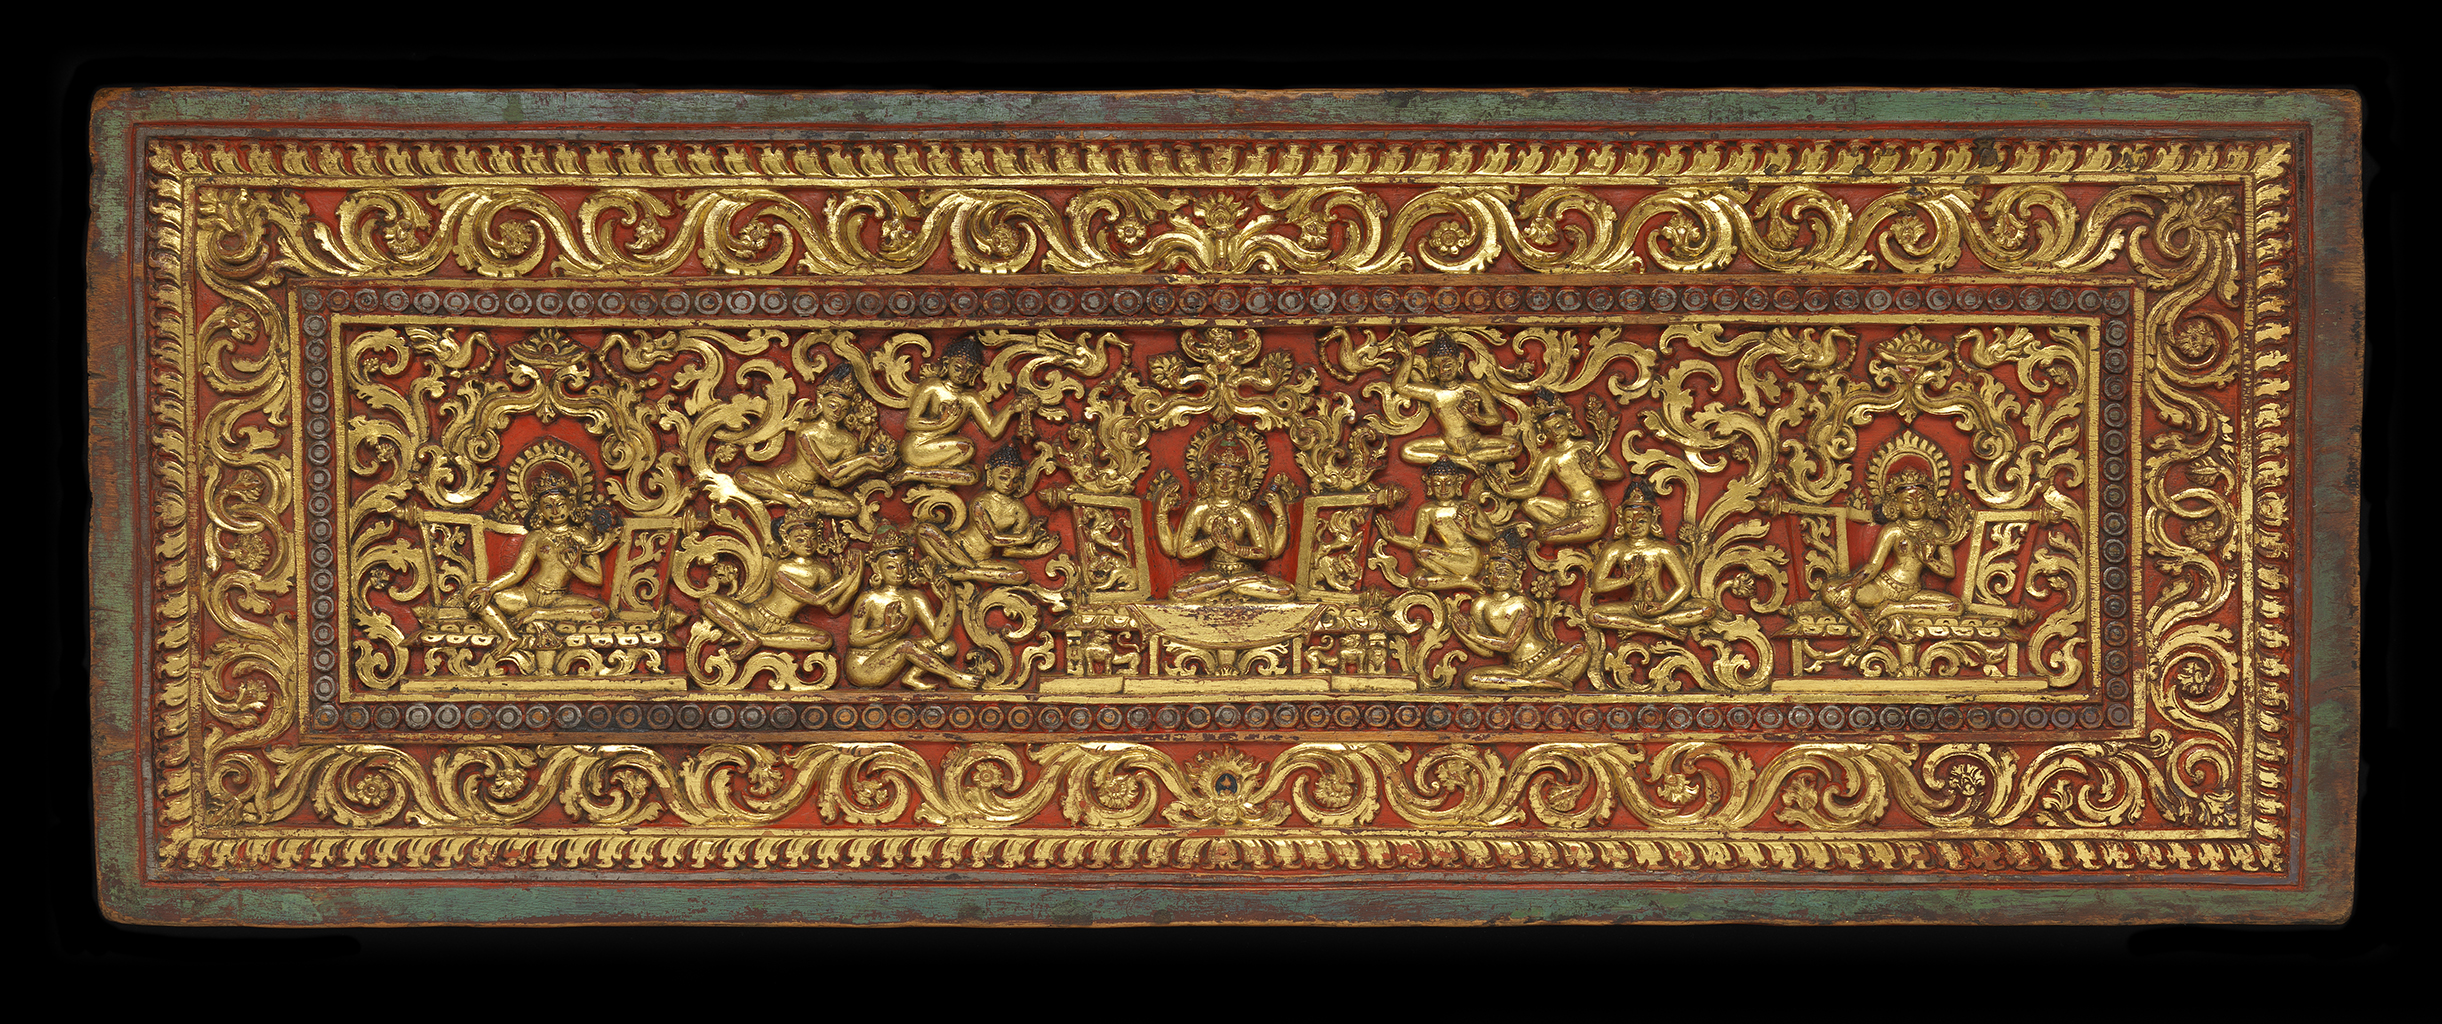 Prajnaparamita and Deities. Outer Face, Upper Cover for a Prajnaparamita Sutra. Tibet; 15th century. Wood, paint and gilding